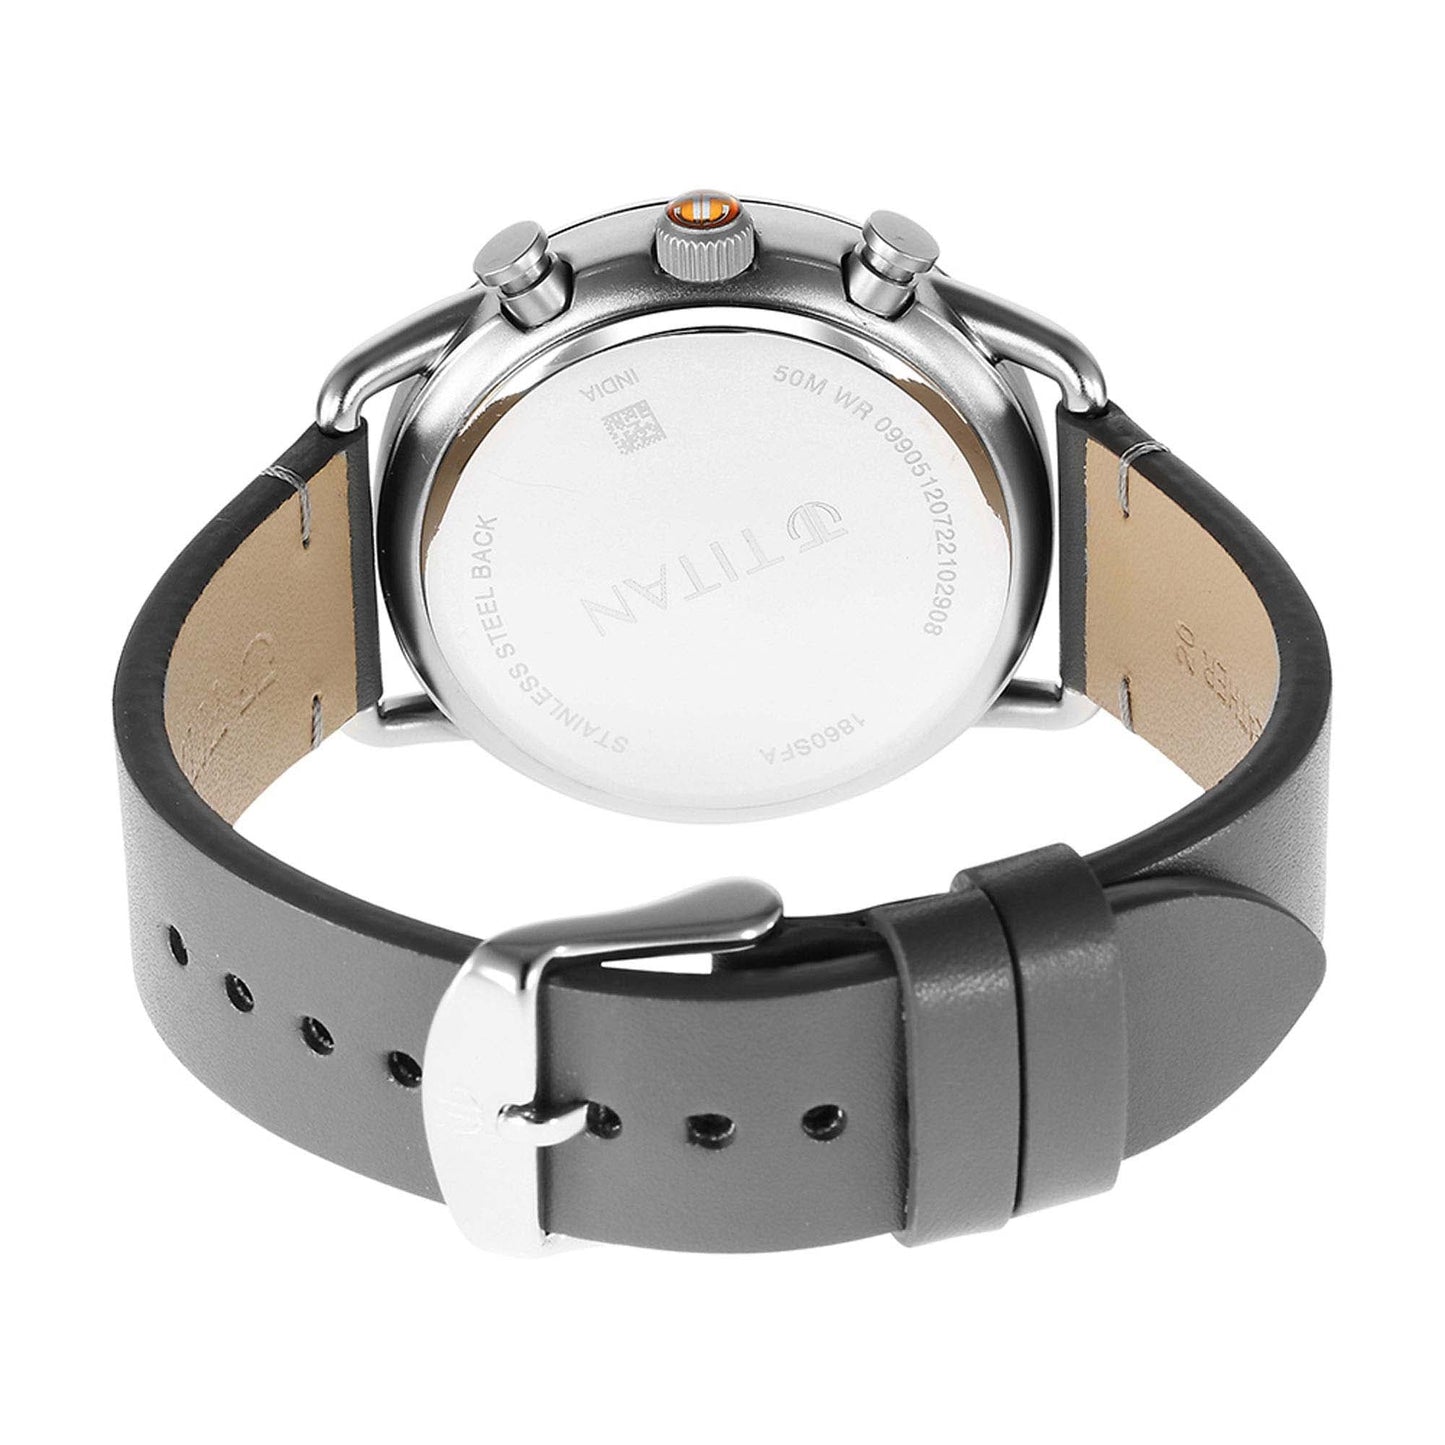 Titan Retro Analog Quartz Leather Strap watch for Men